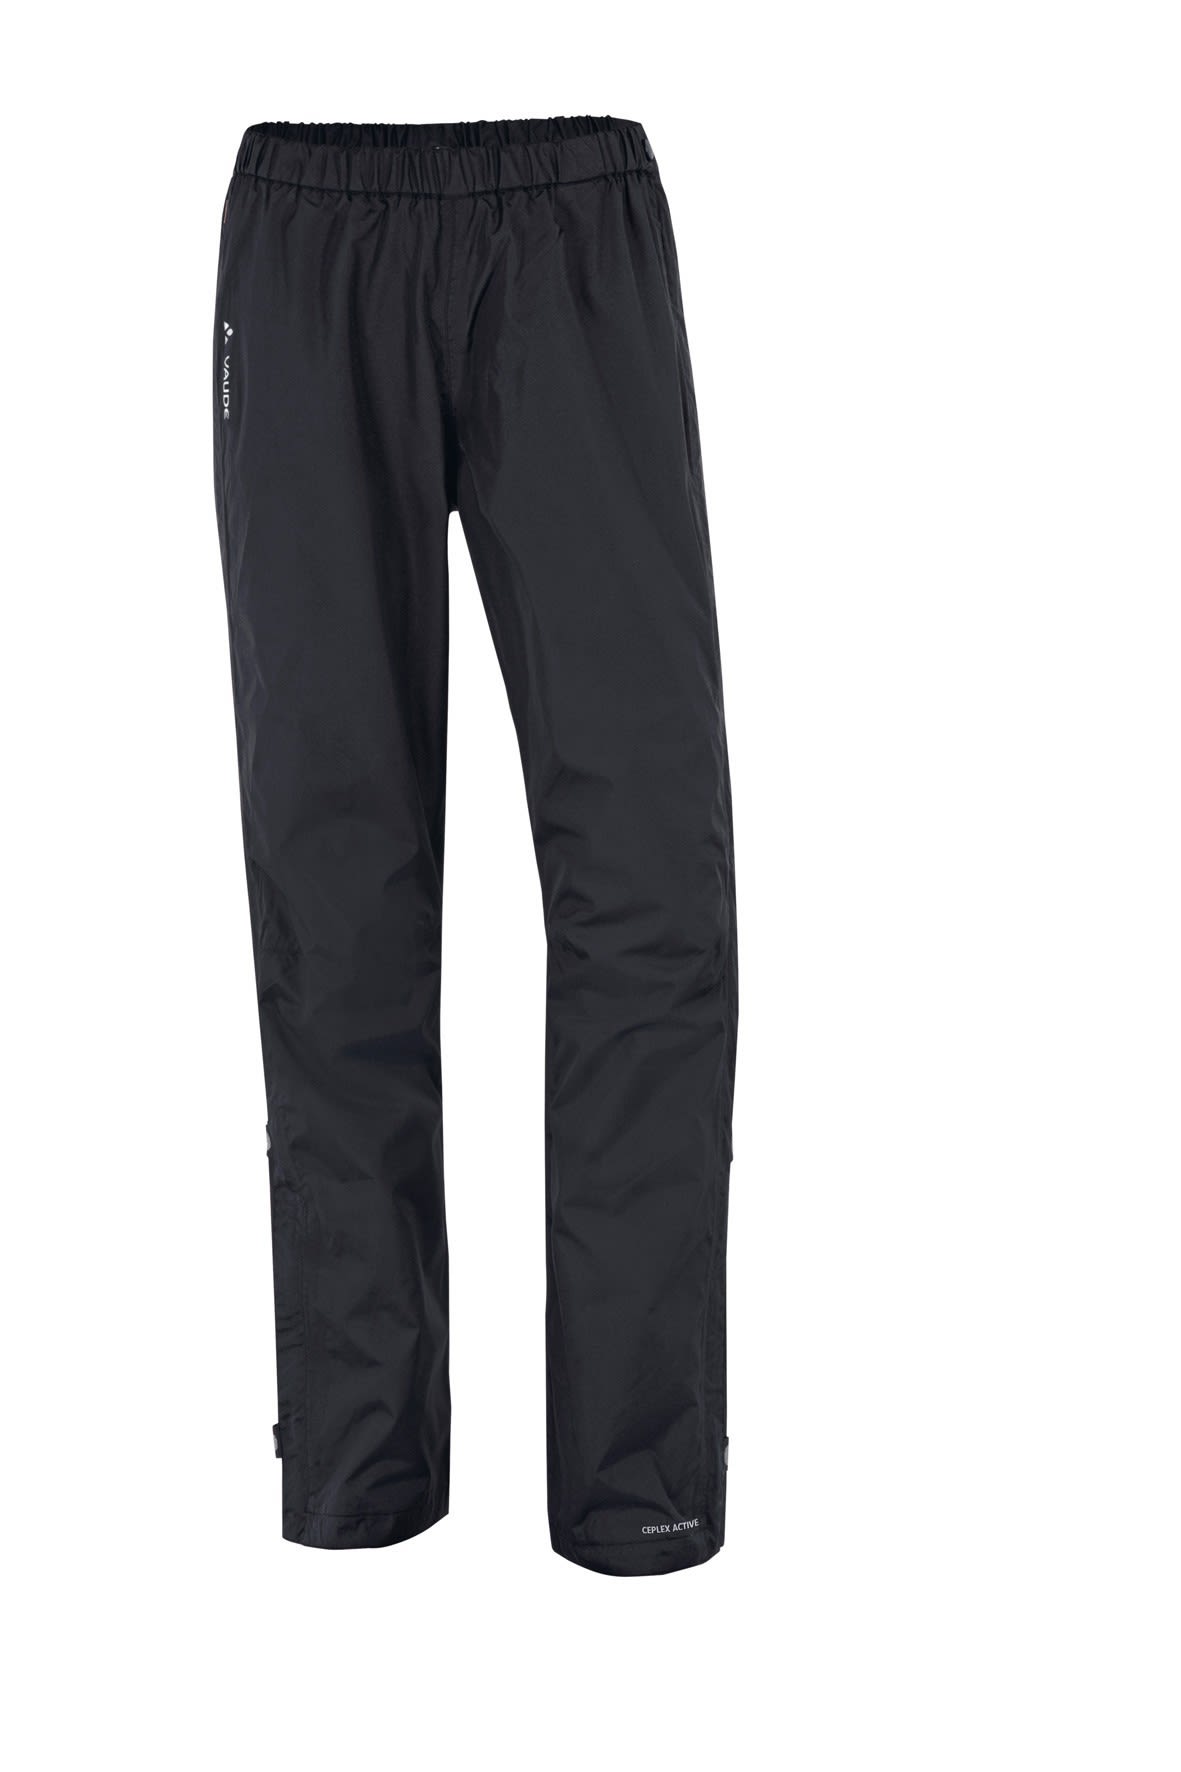 Vaude Fluid Full-Zip Pants Schwarz- Female Hosen- Grsse 38 - Farbe Black